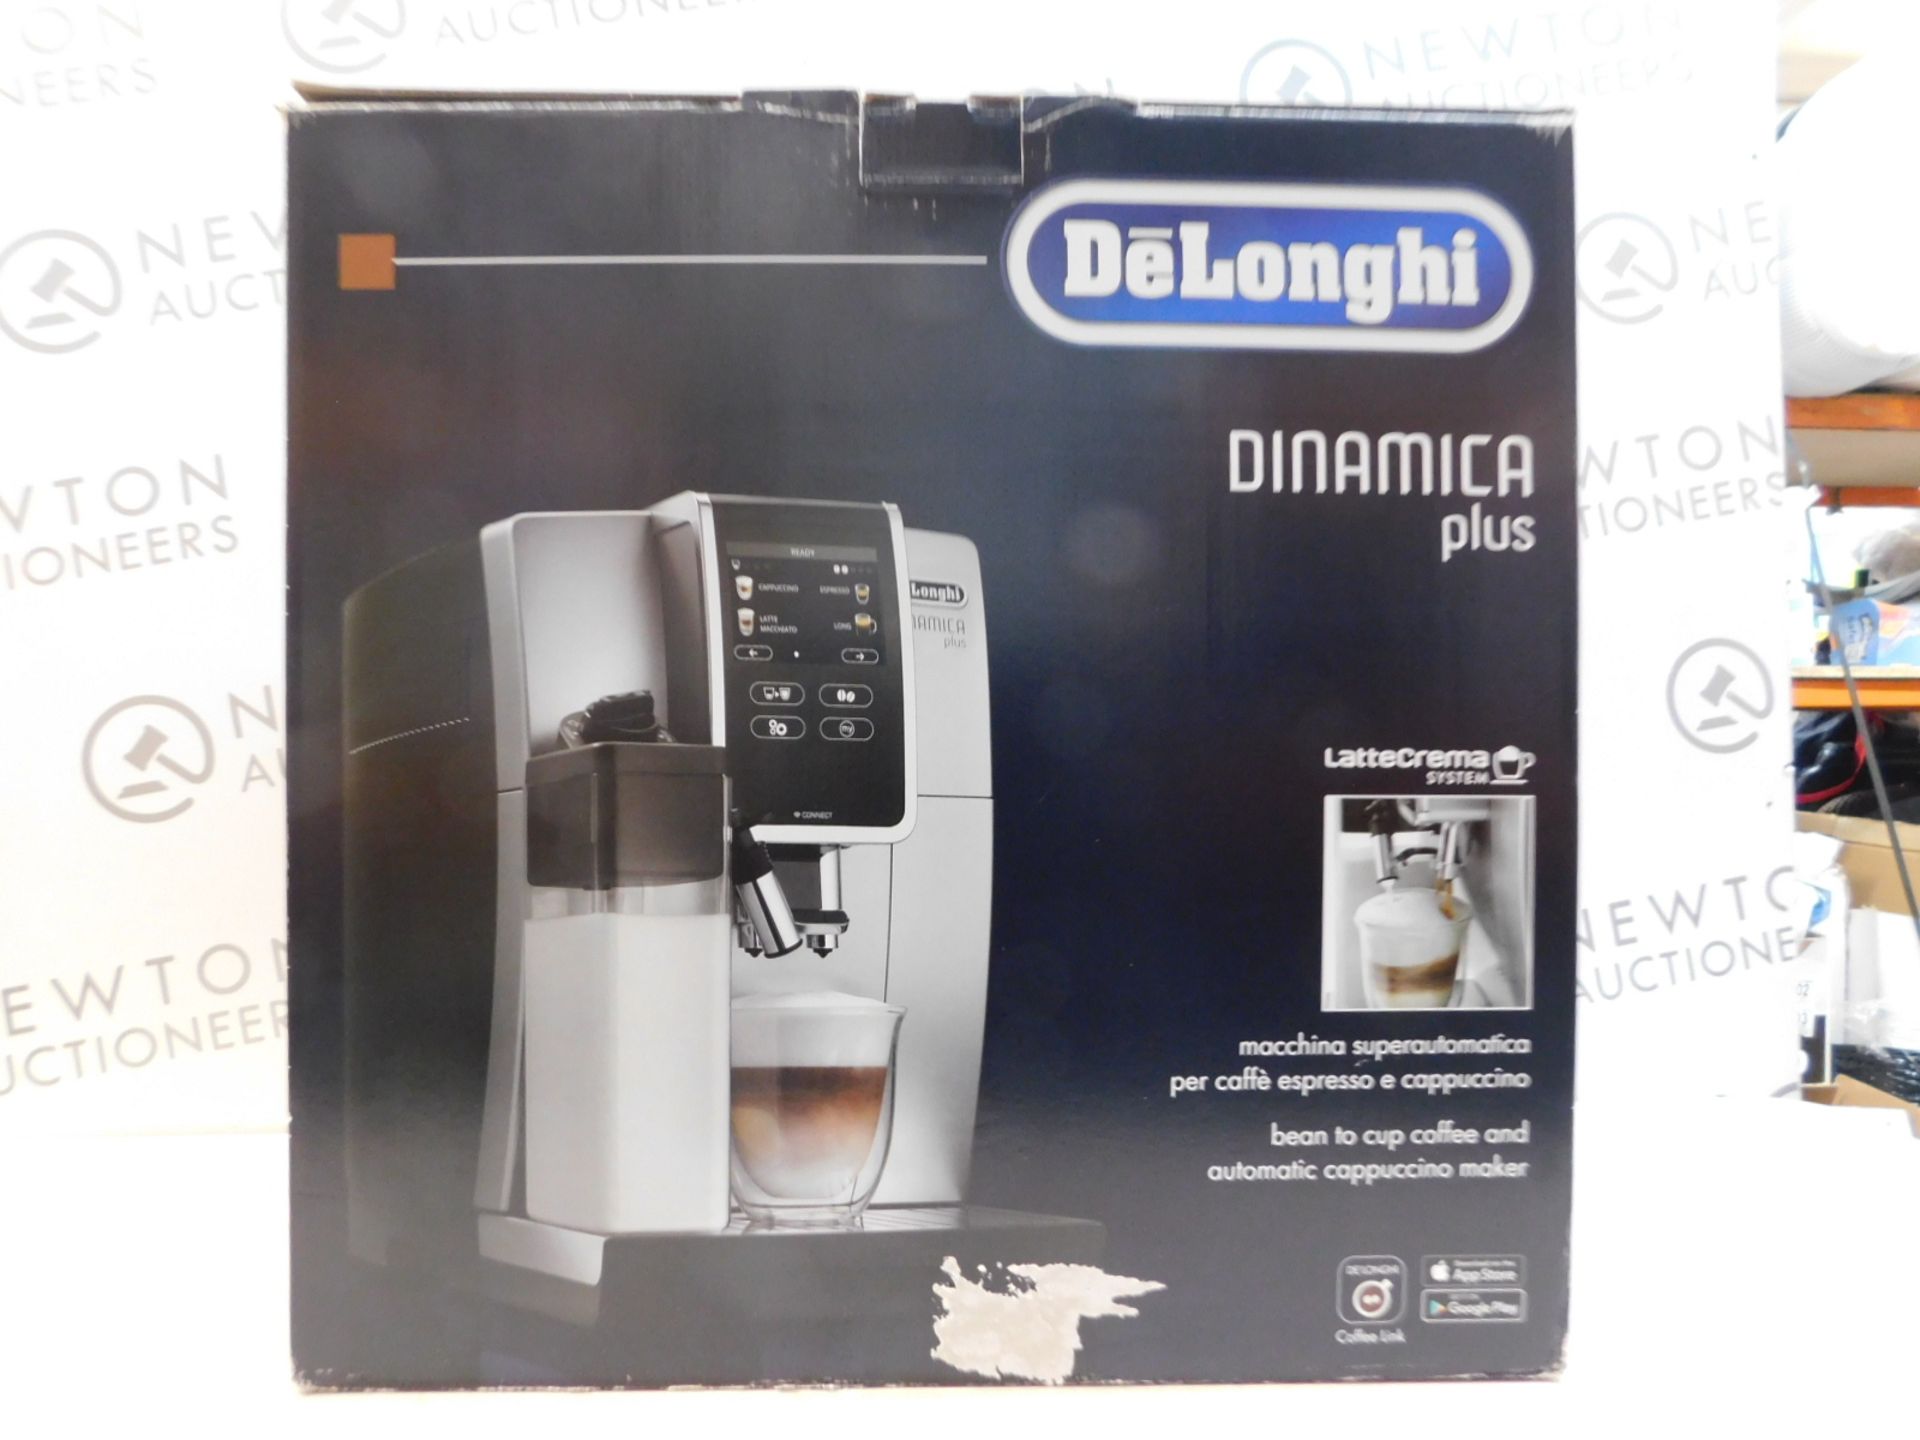 1 DELONGHI DINAMICA PLUS ECAM370.85.SB BEAN TO CUP COFFEE MACHINE RRP Â£999 - Image 2 of 2